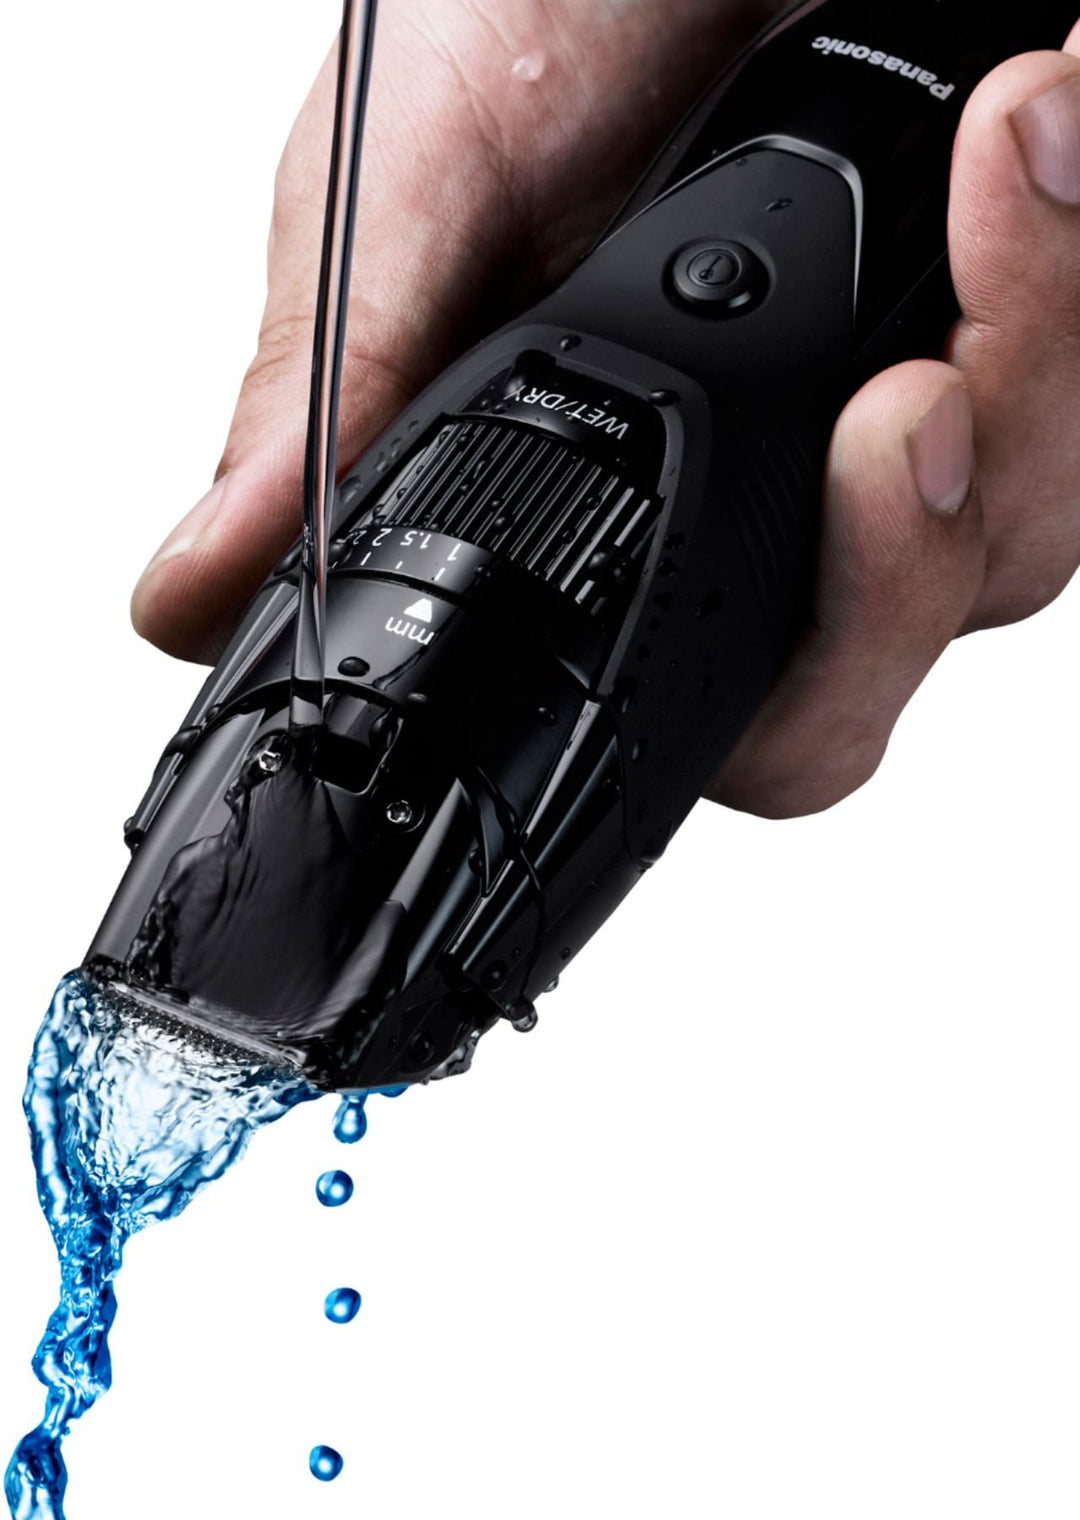 Panasonic - Rechargeable Beard/Hair Trimmer with Adjustable Trim Settings Wet/Dry – ER-GB42-K - Black_3